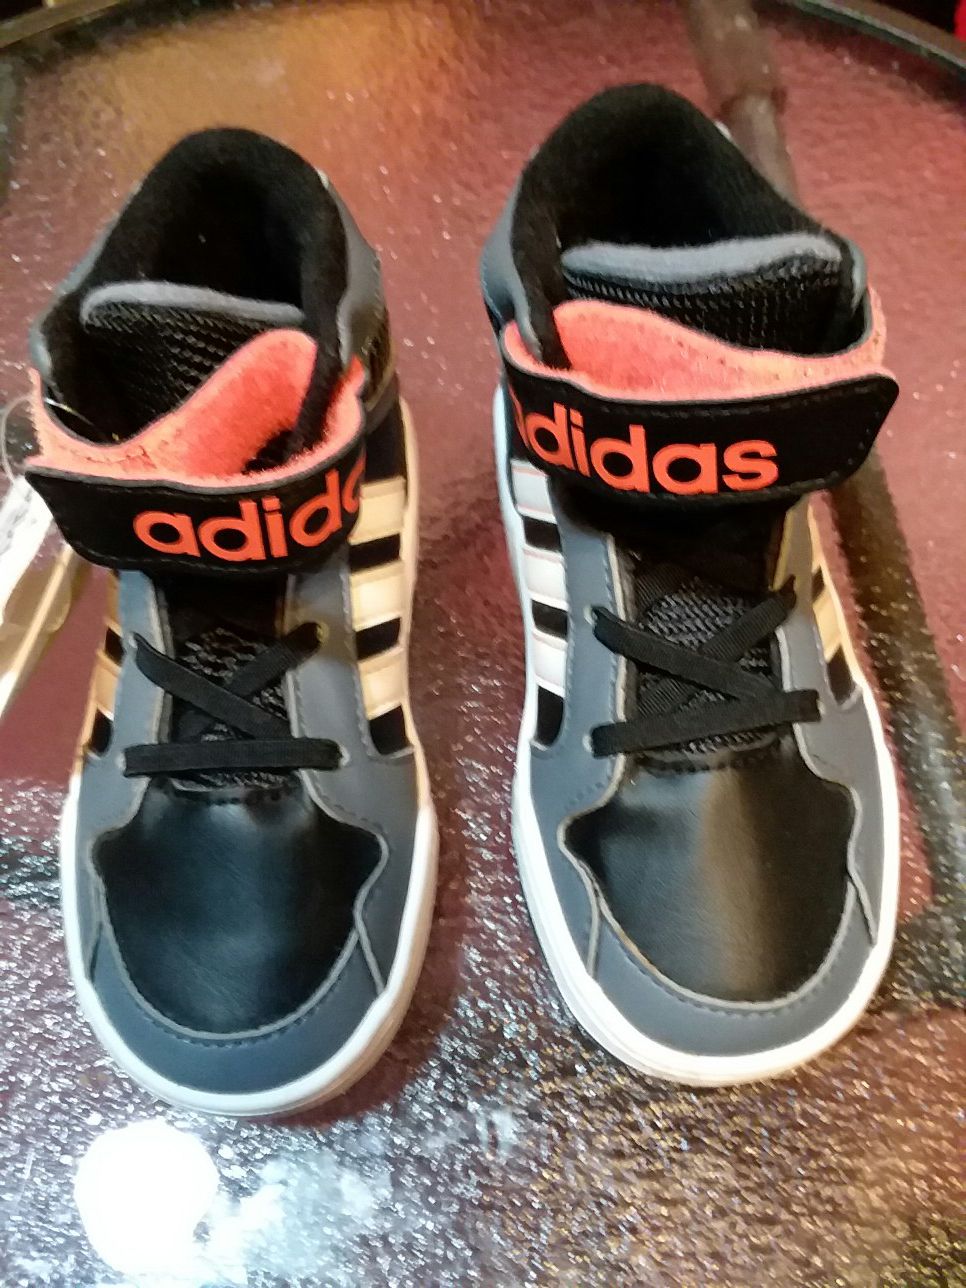 Adidas infant shoes